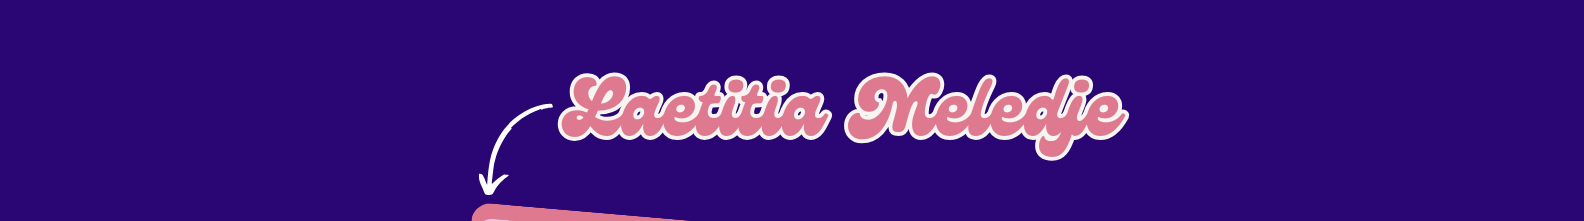 Laetitia Meledje's profile banner